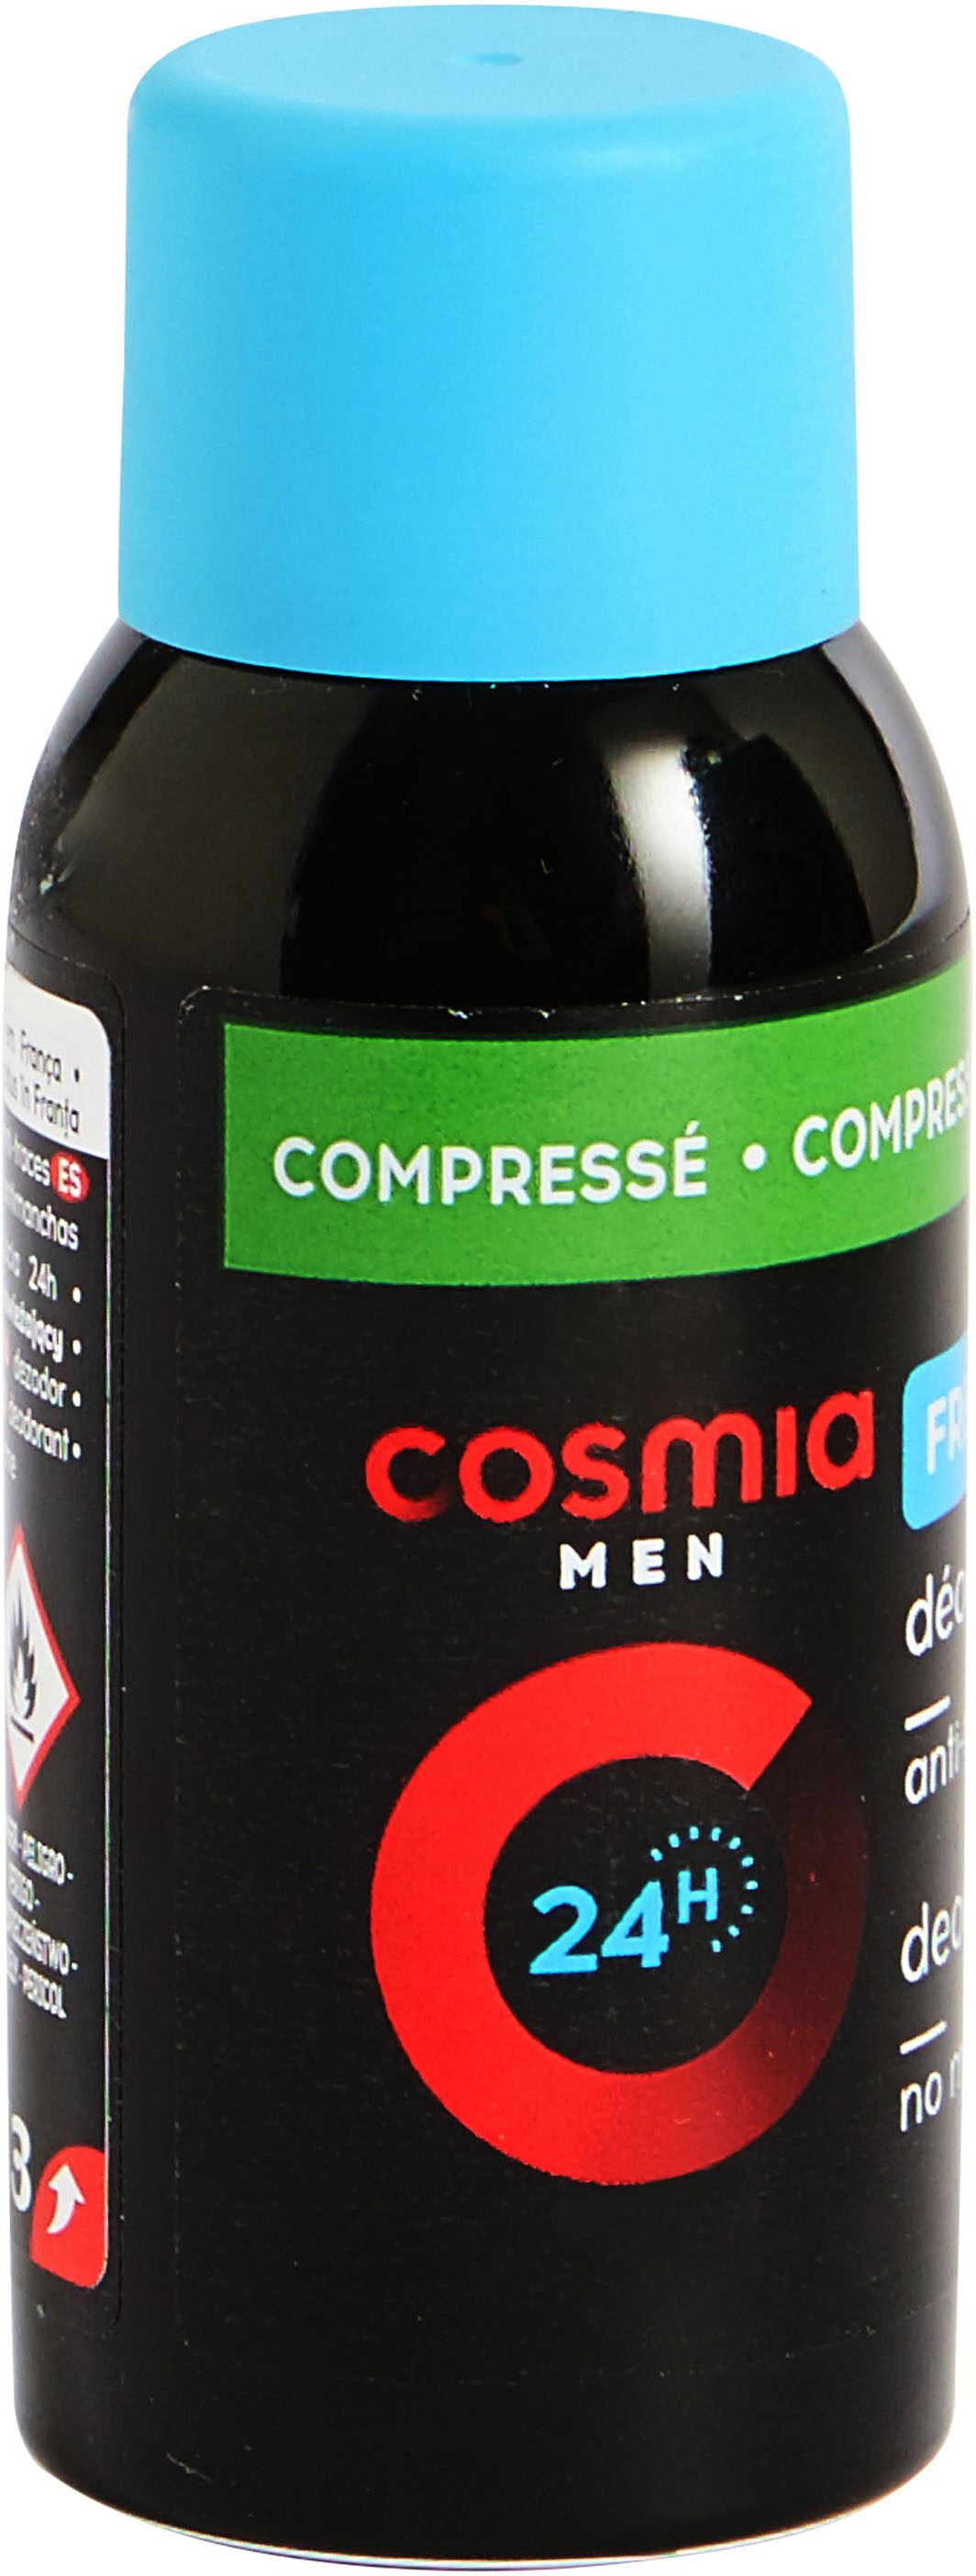 Cosmia deodorant homme atomiseur corps fraicheur 75 ml - Produkt - fr